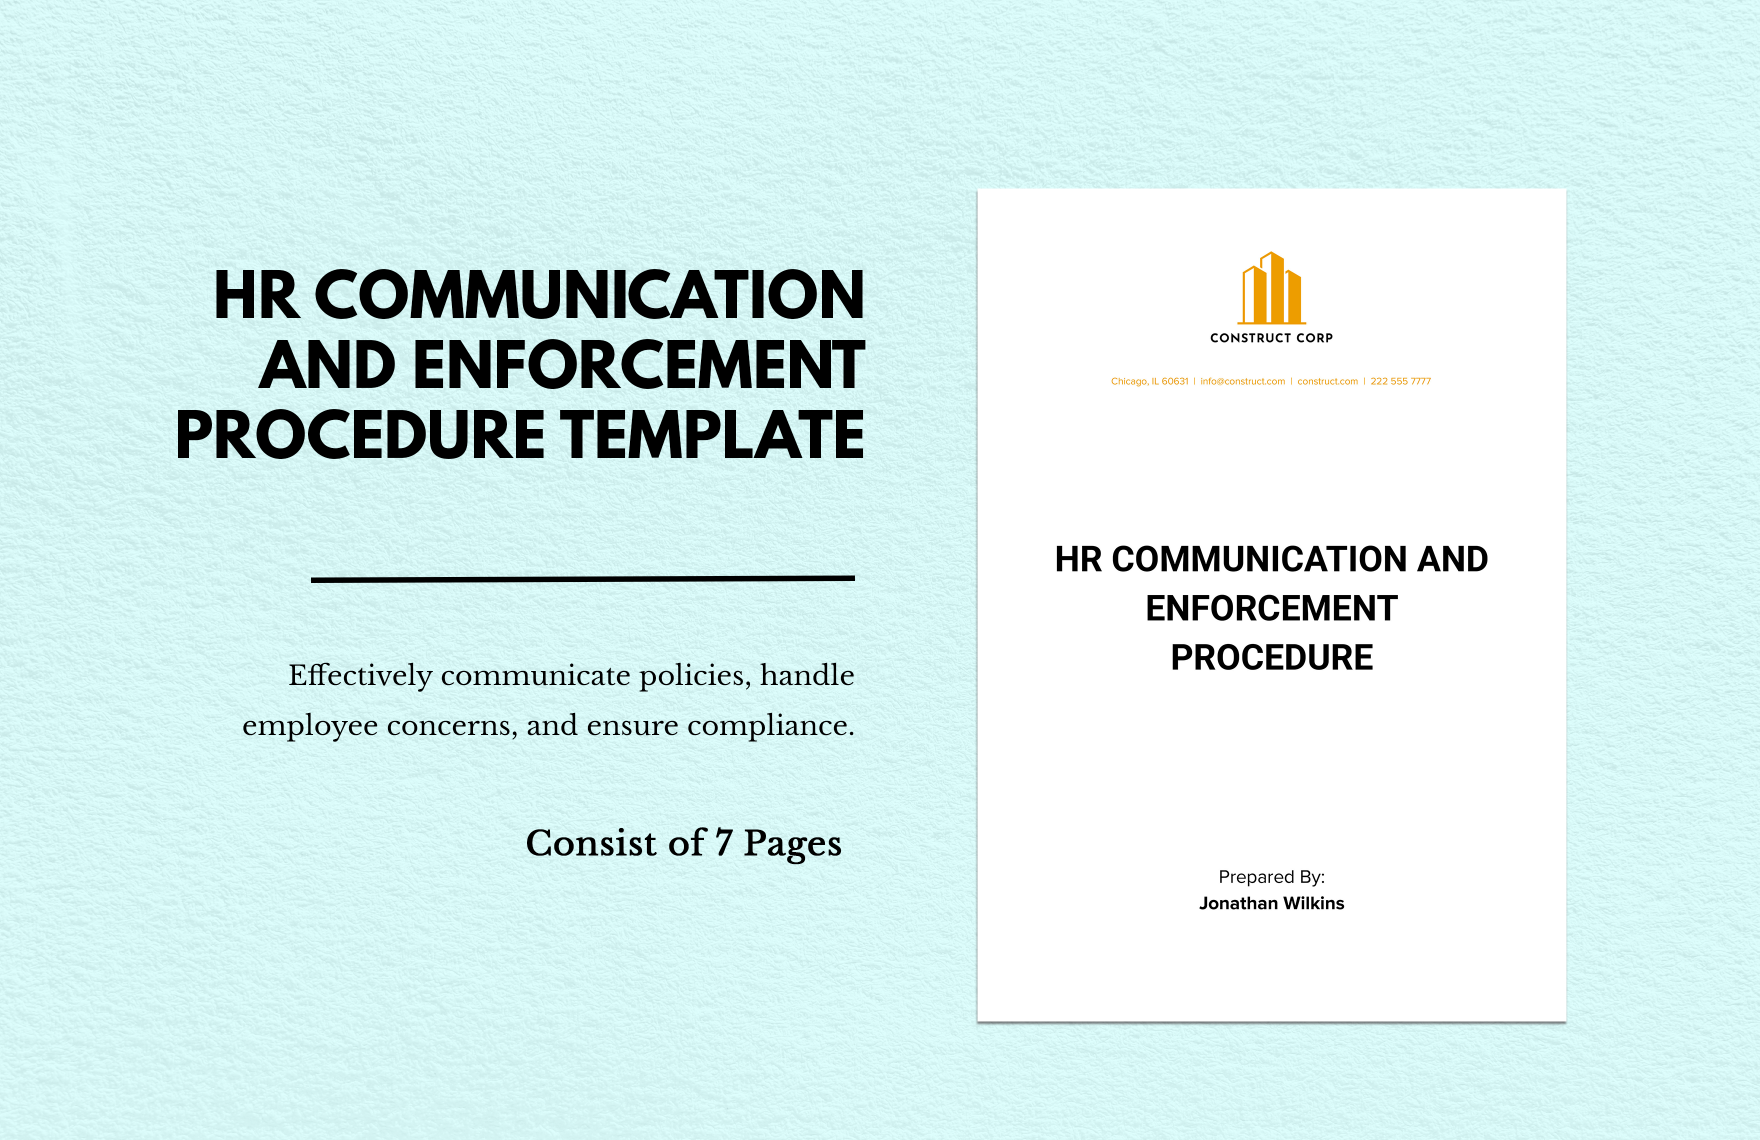 HR Communication and Enforcement Procedure in Word, Google Docs